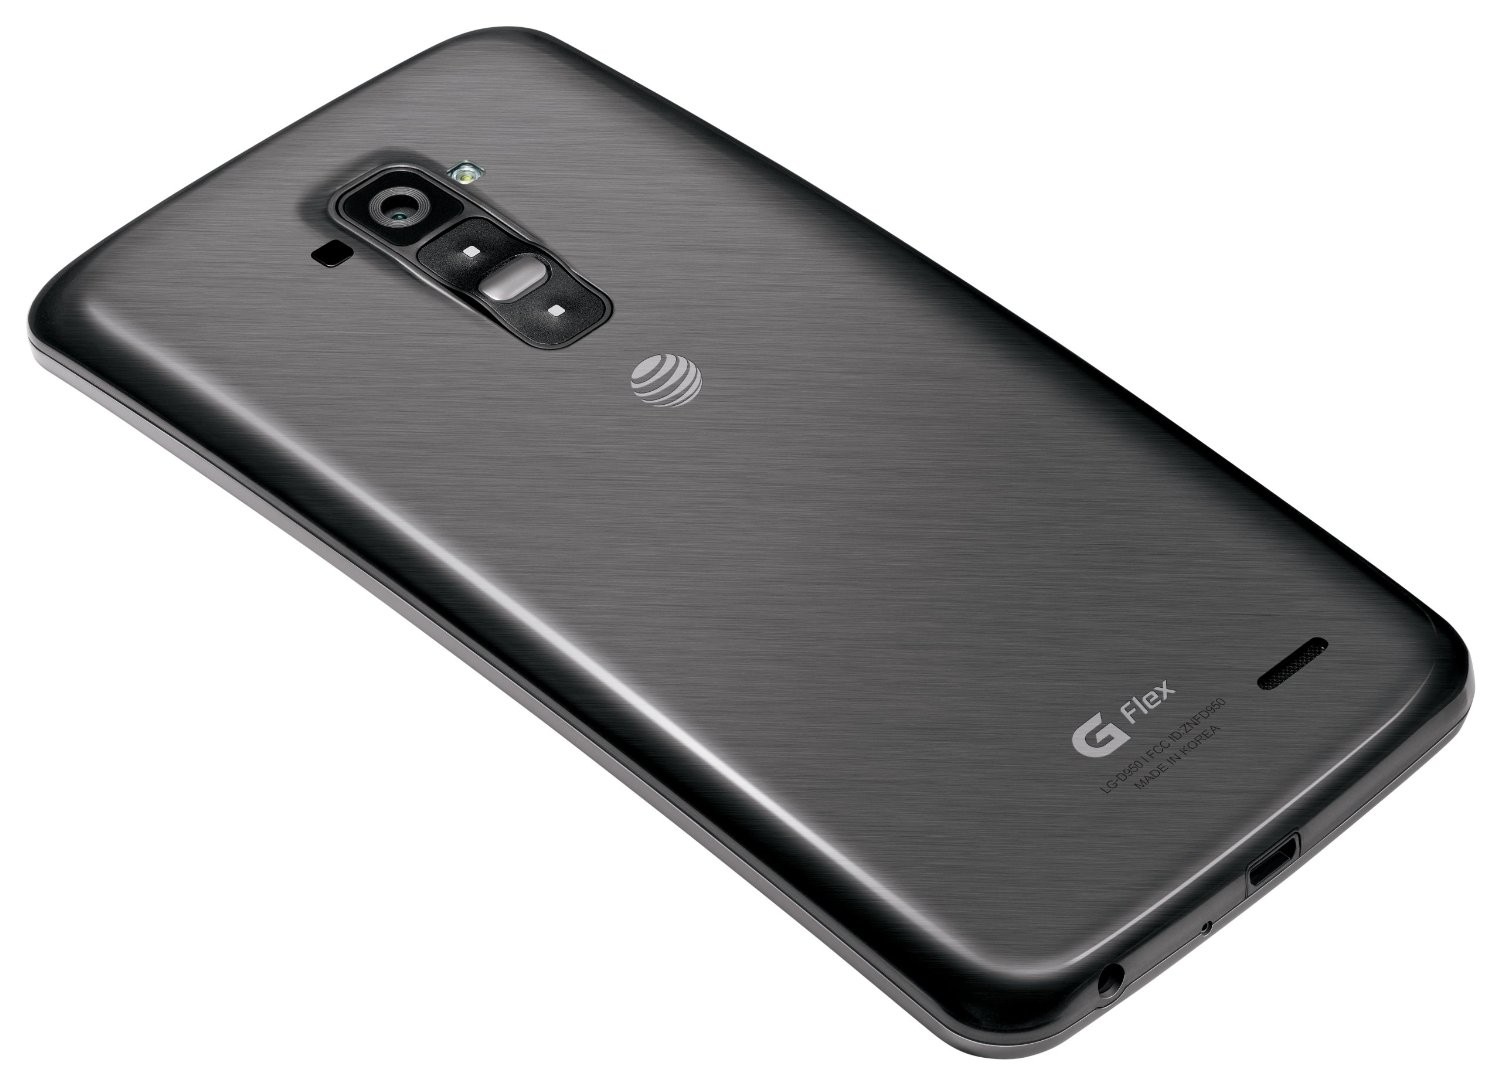 LG G Flex D950 recibe la actualización D95020g mientras continúa la espera de Lollipop